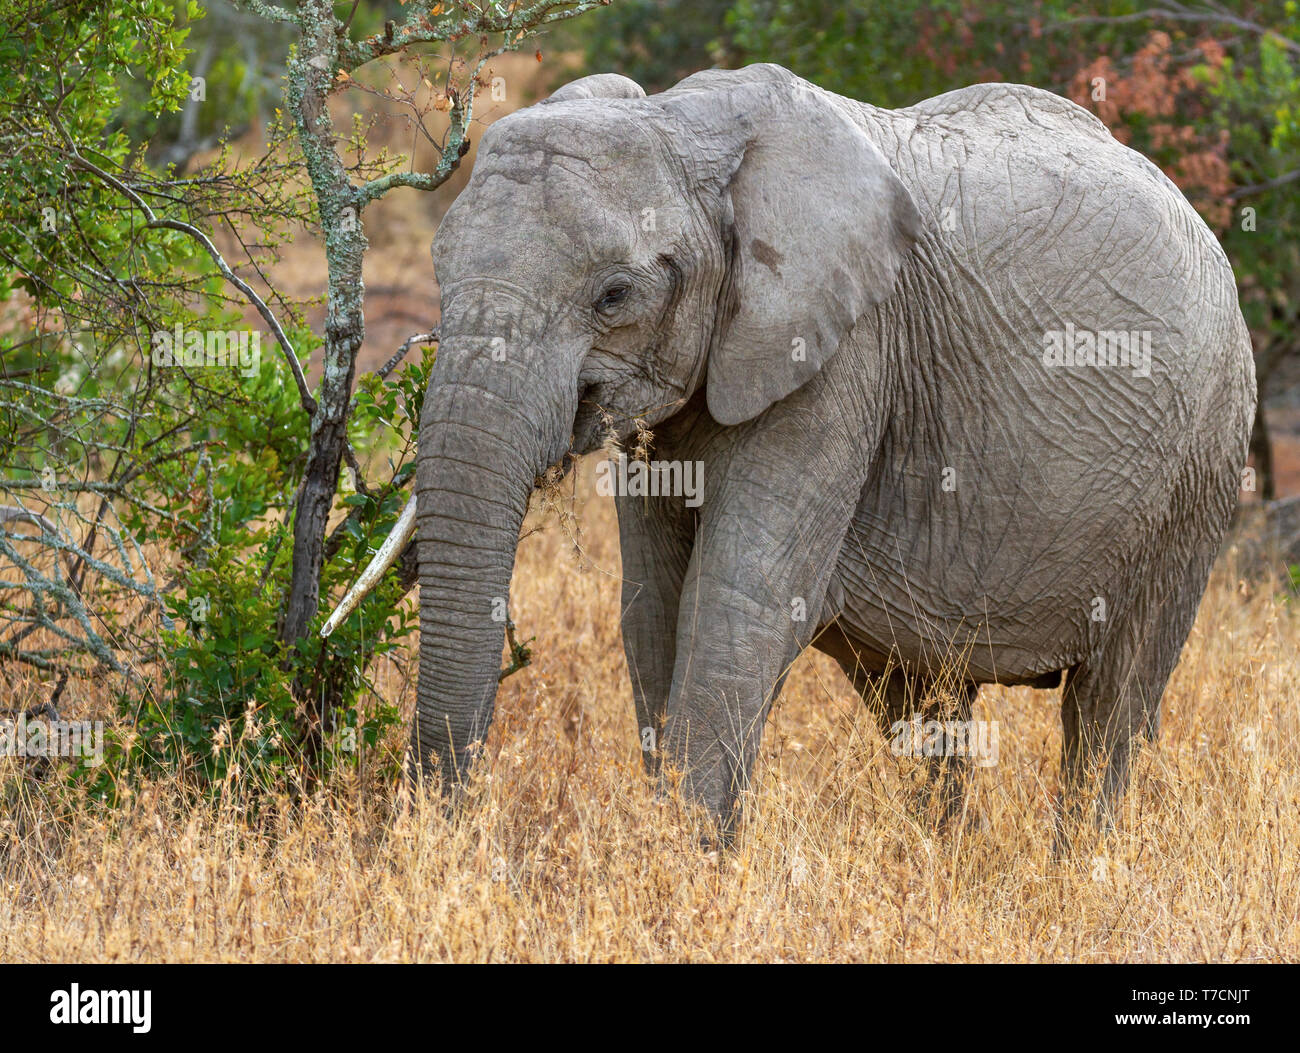 African elephant Loxodonta africana with creased wrinkled skin eating golden barley grass Ol Pejeta Conservancy Kenya East Africa wallpaper Stock Photo